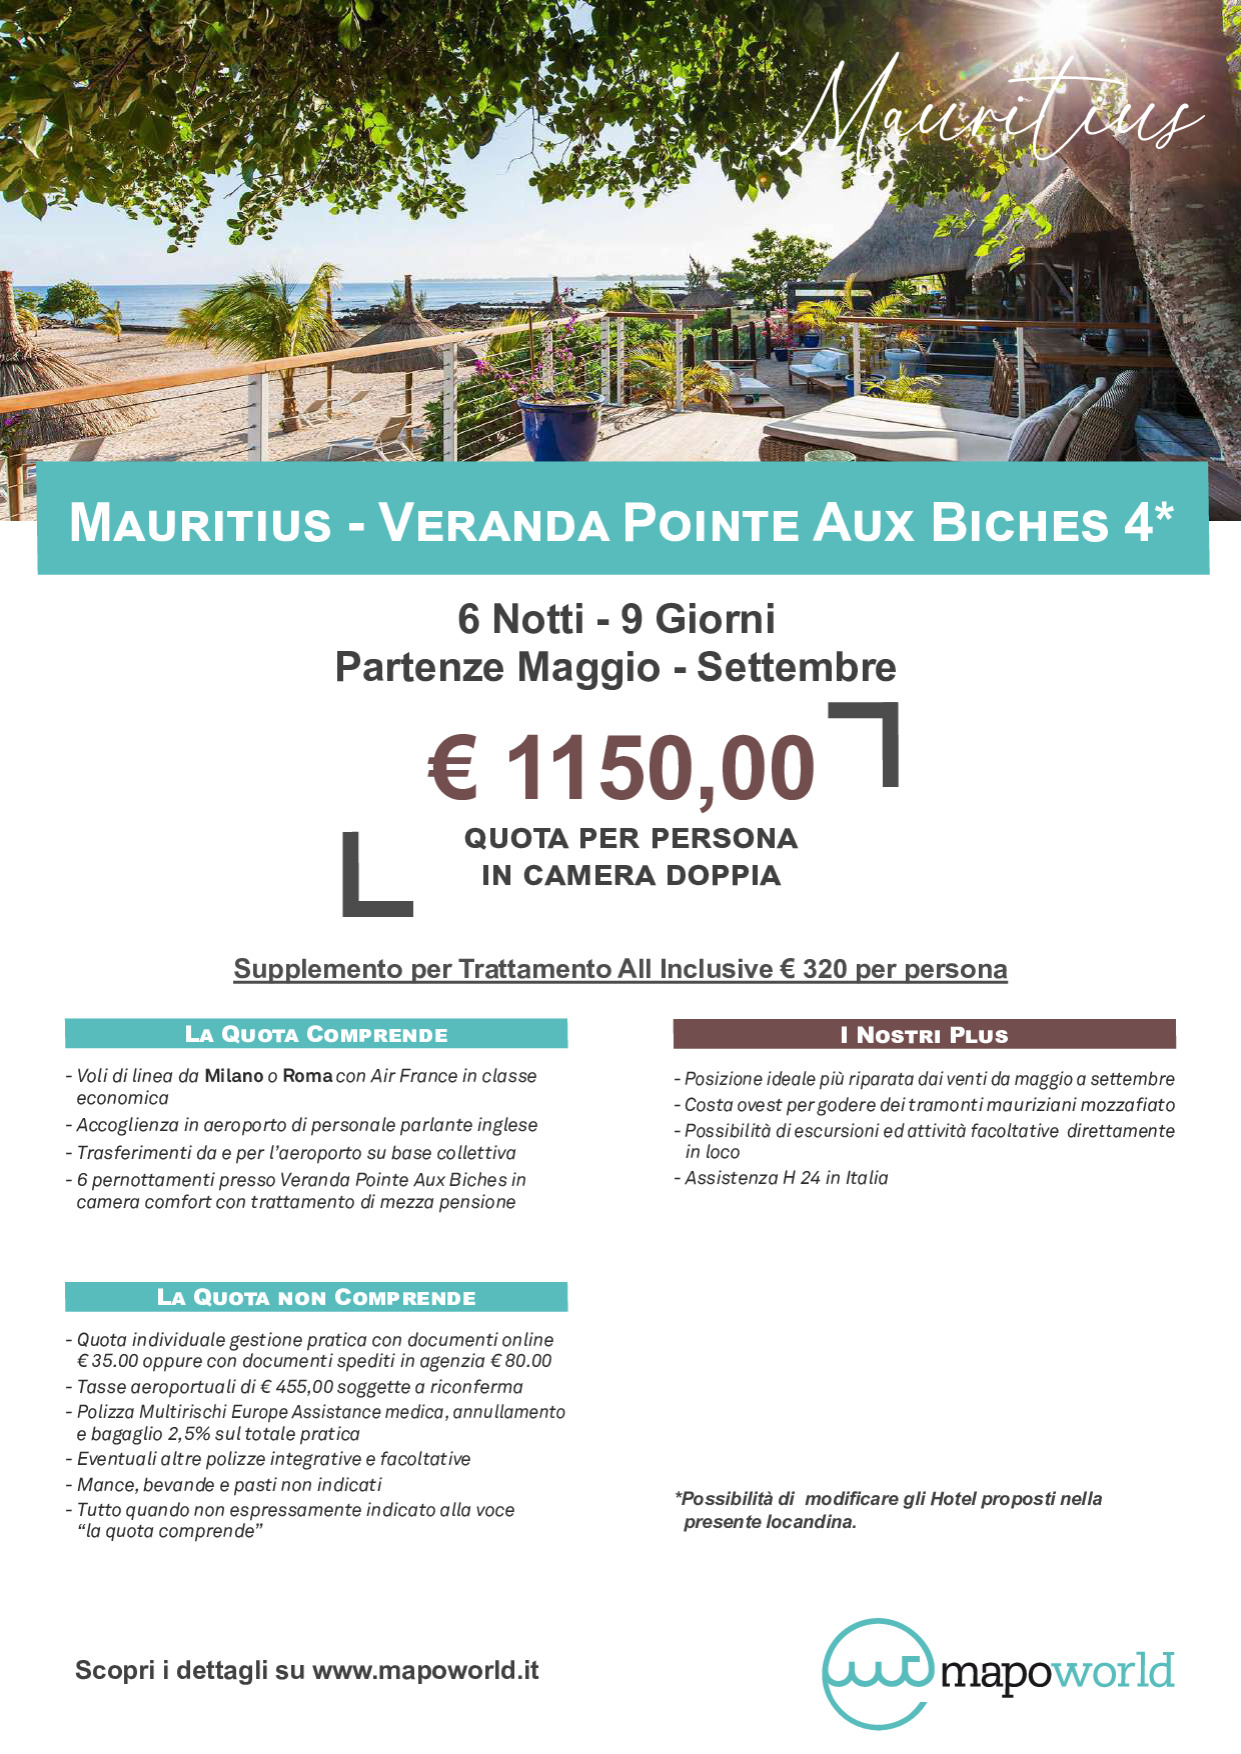 Mauritius - Veranda Pointe Aux Biches 4*